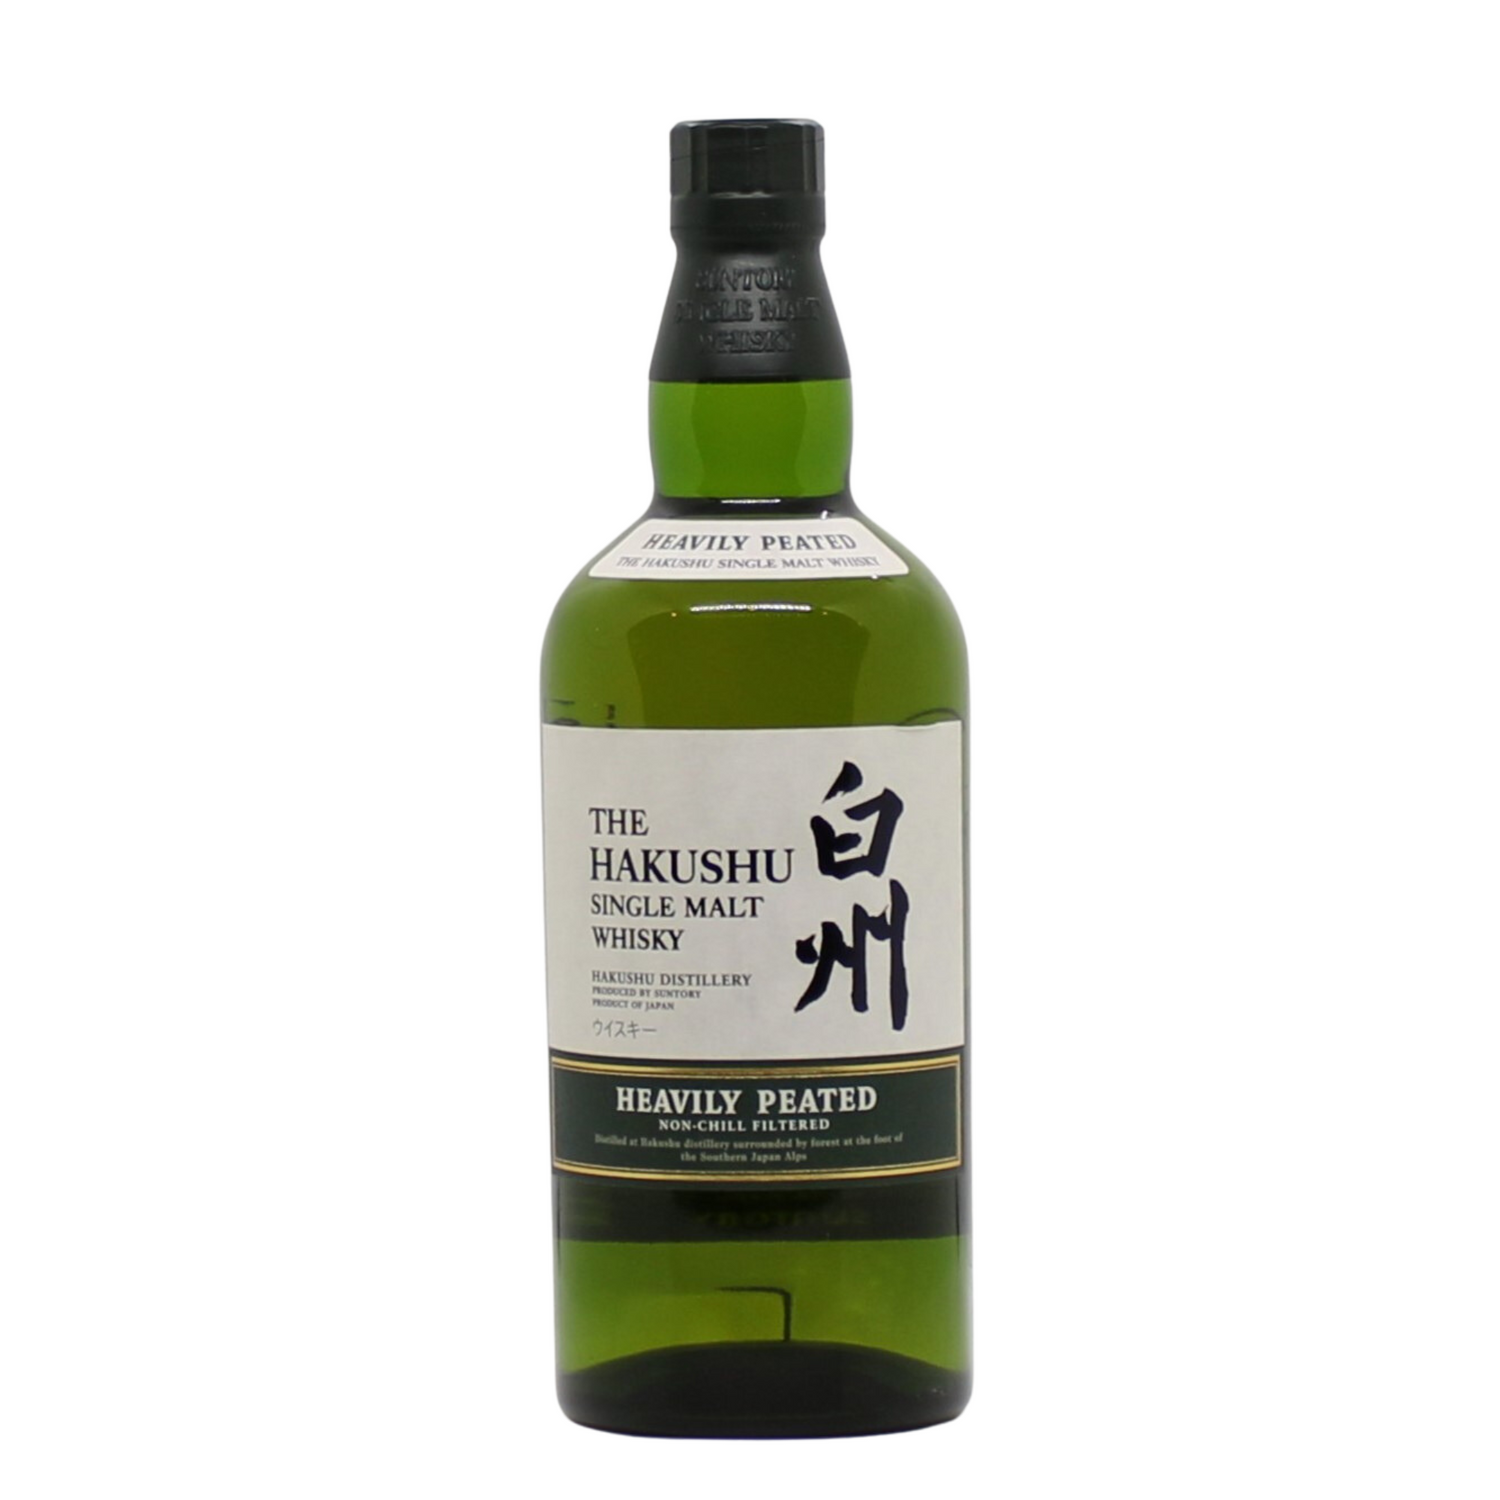 Hakushu Heavily Peated Single Malt Japanese Whisky 2010/2011 Release